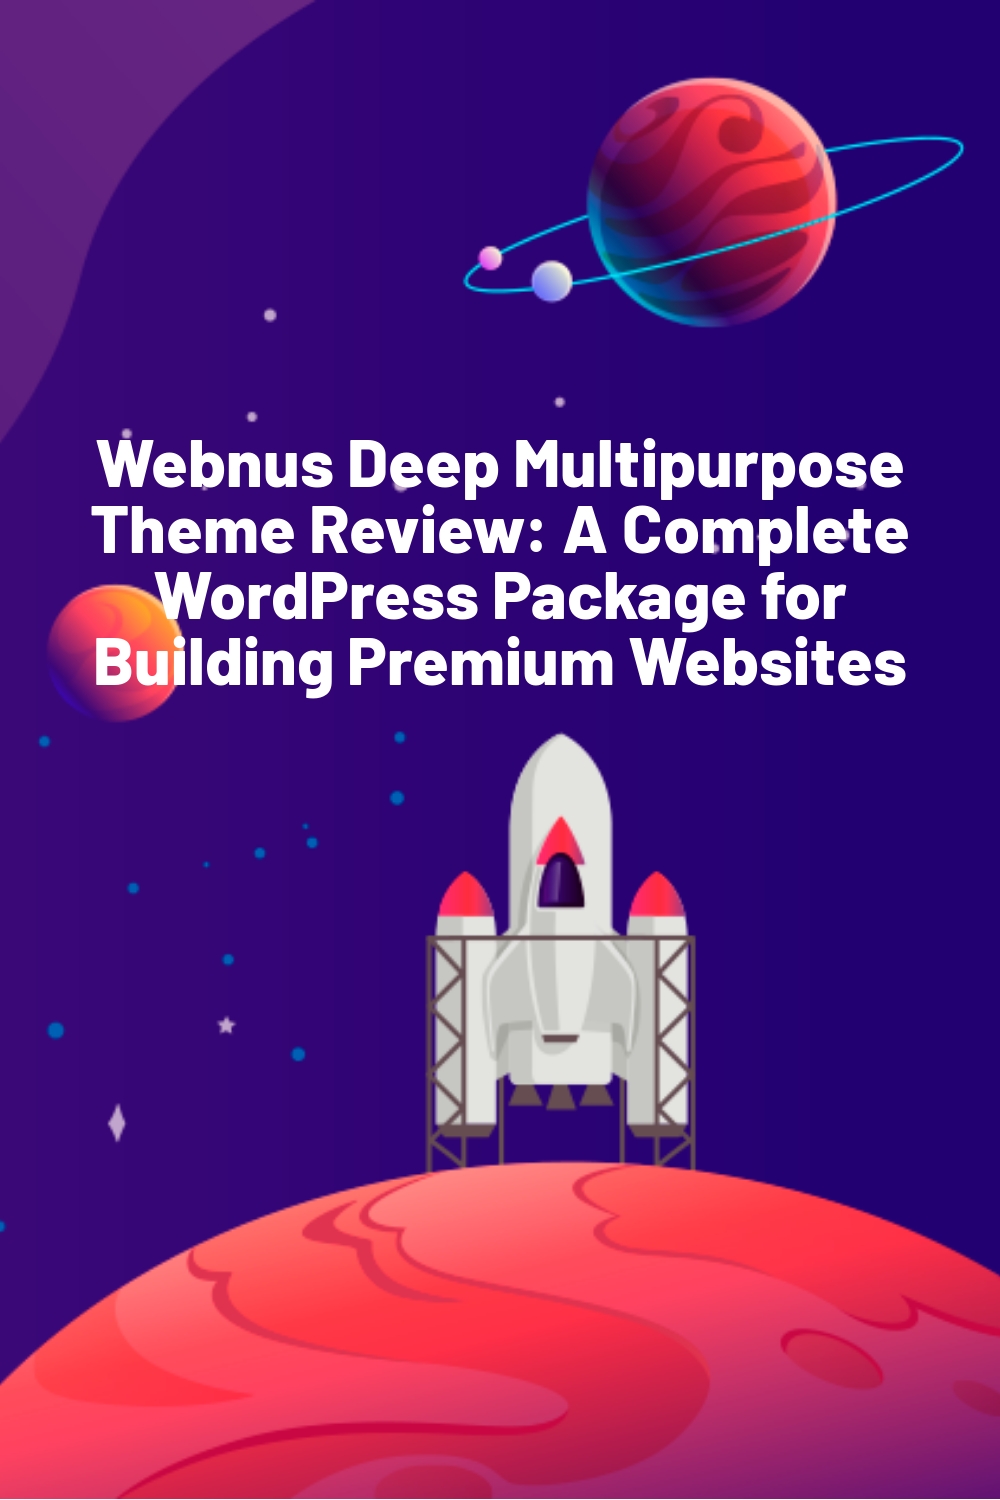 Webnus Deep Multipurpose Theme Review: A Complete WordPress Package for Building Premium Websites